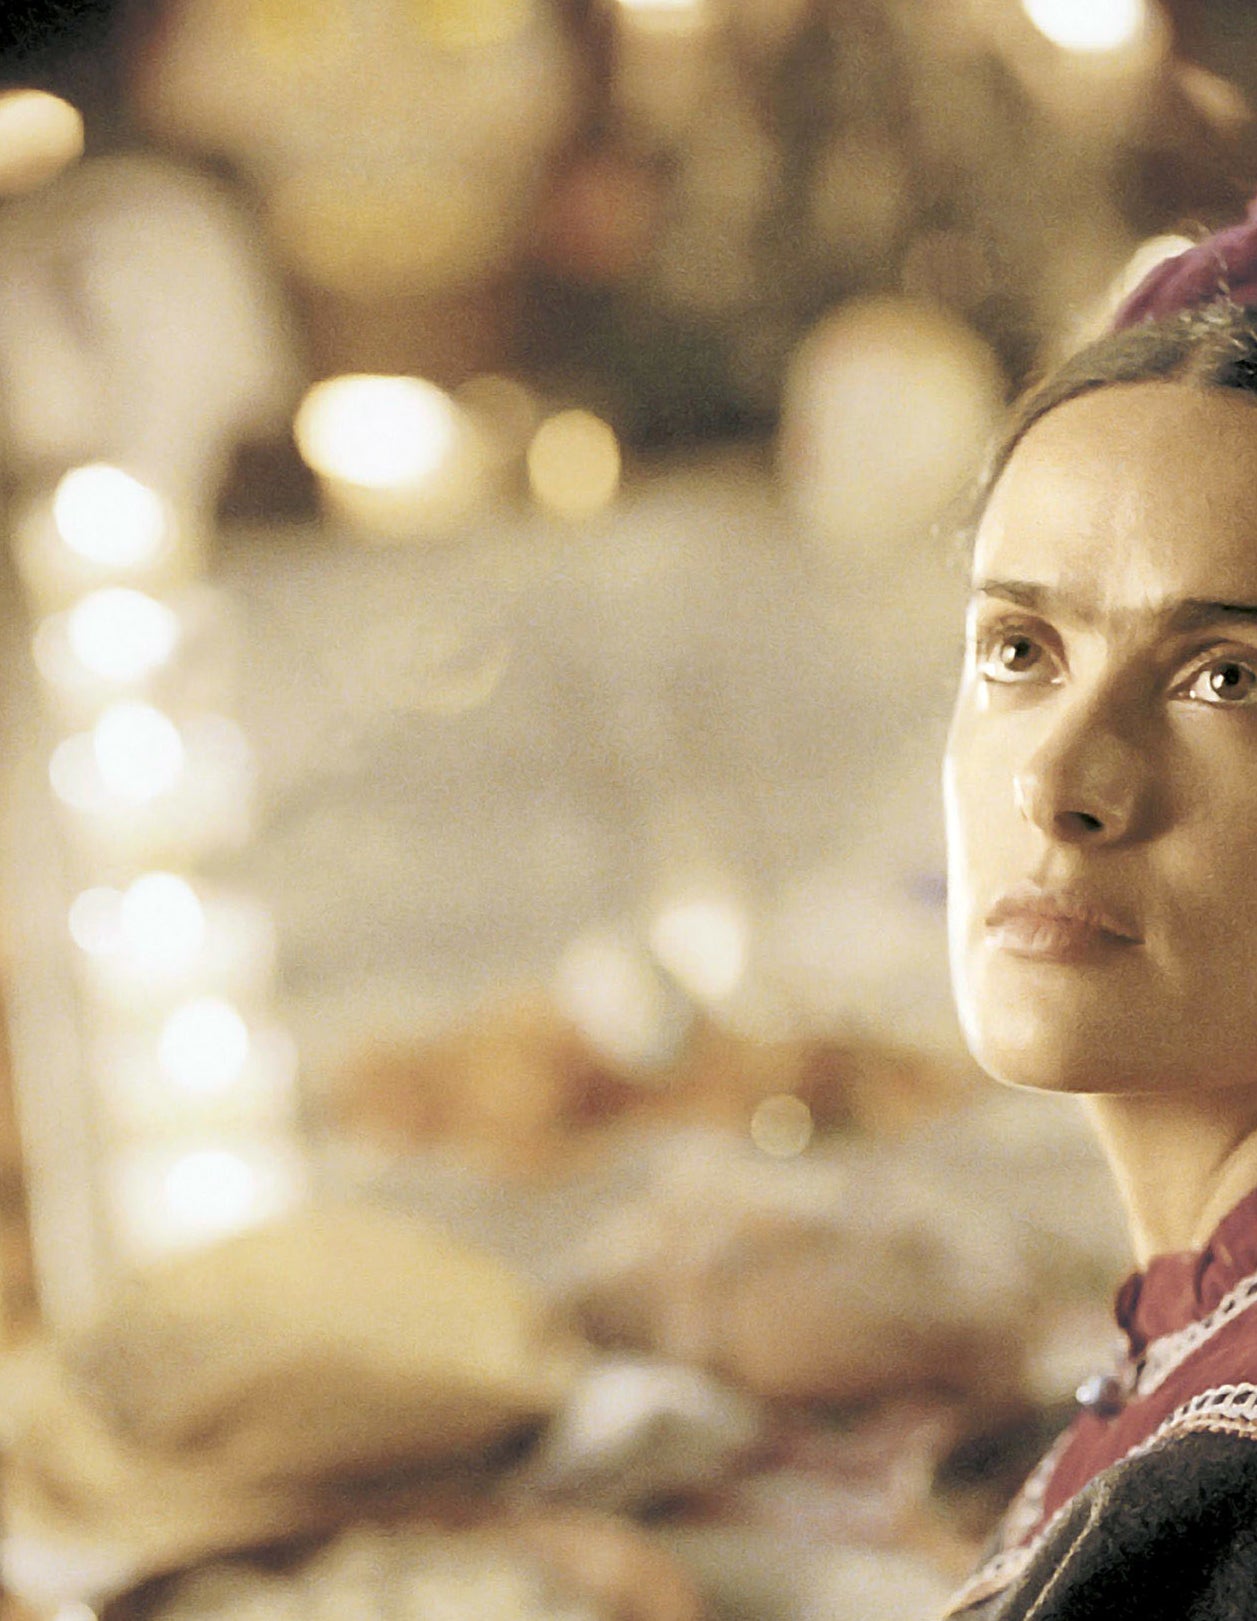 Close-up of Salma as Frida